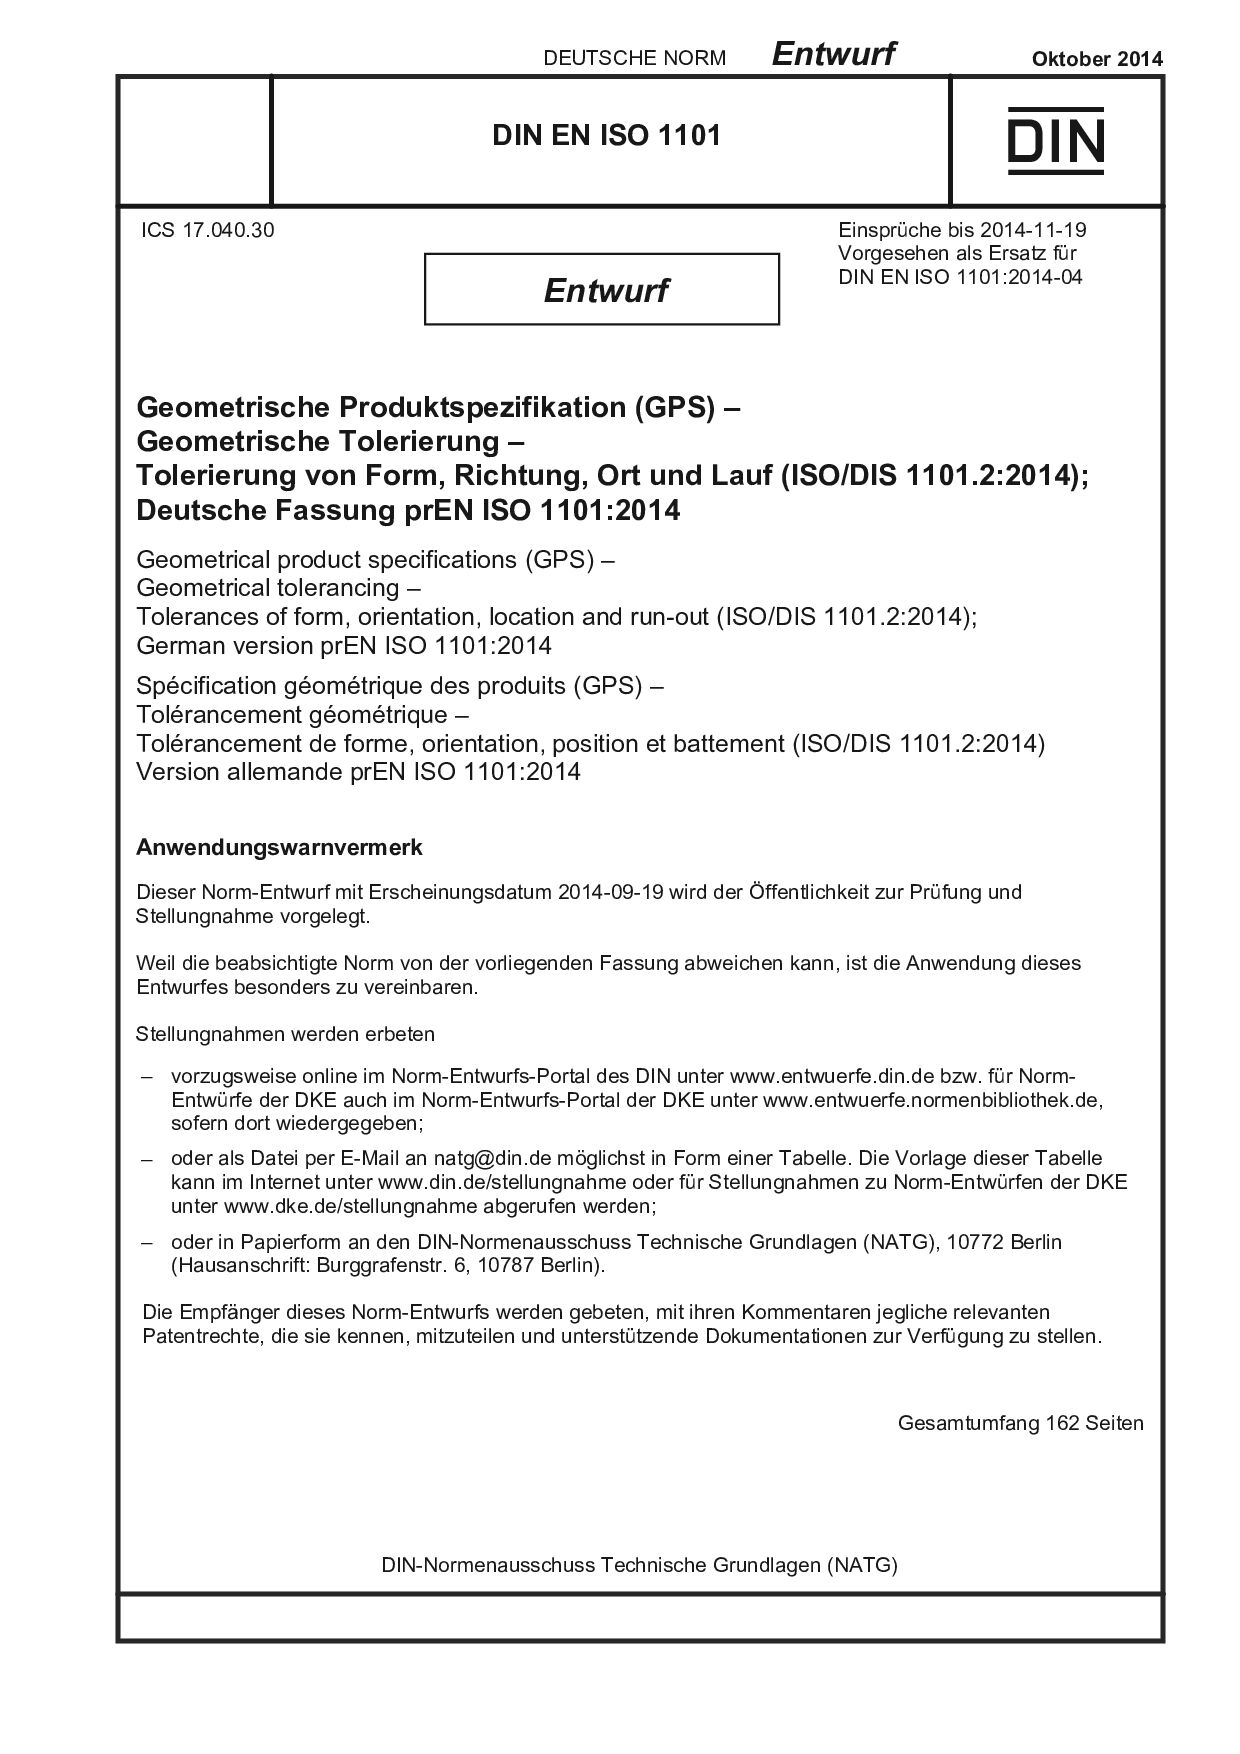 DIN EN ISO 1101 E:2014-10